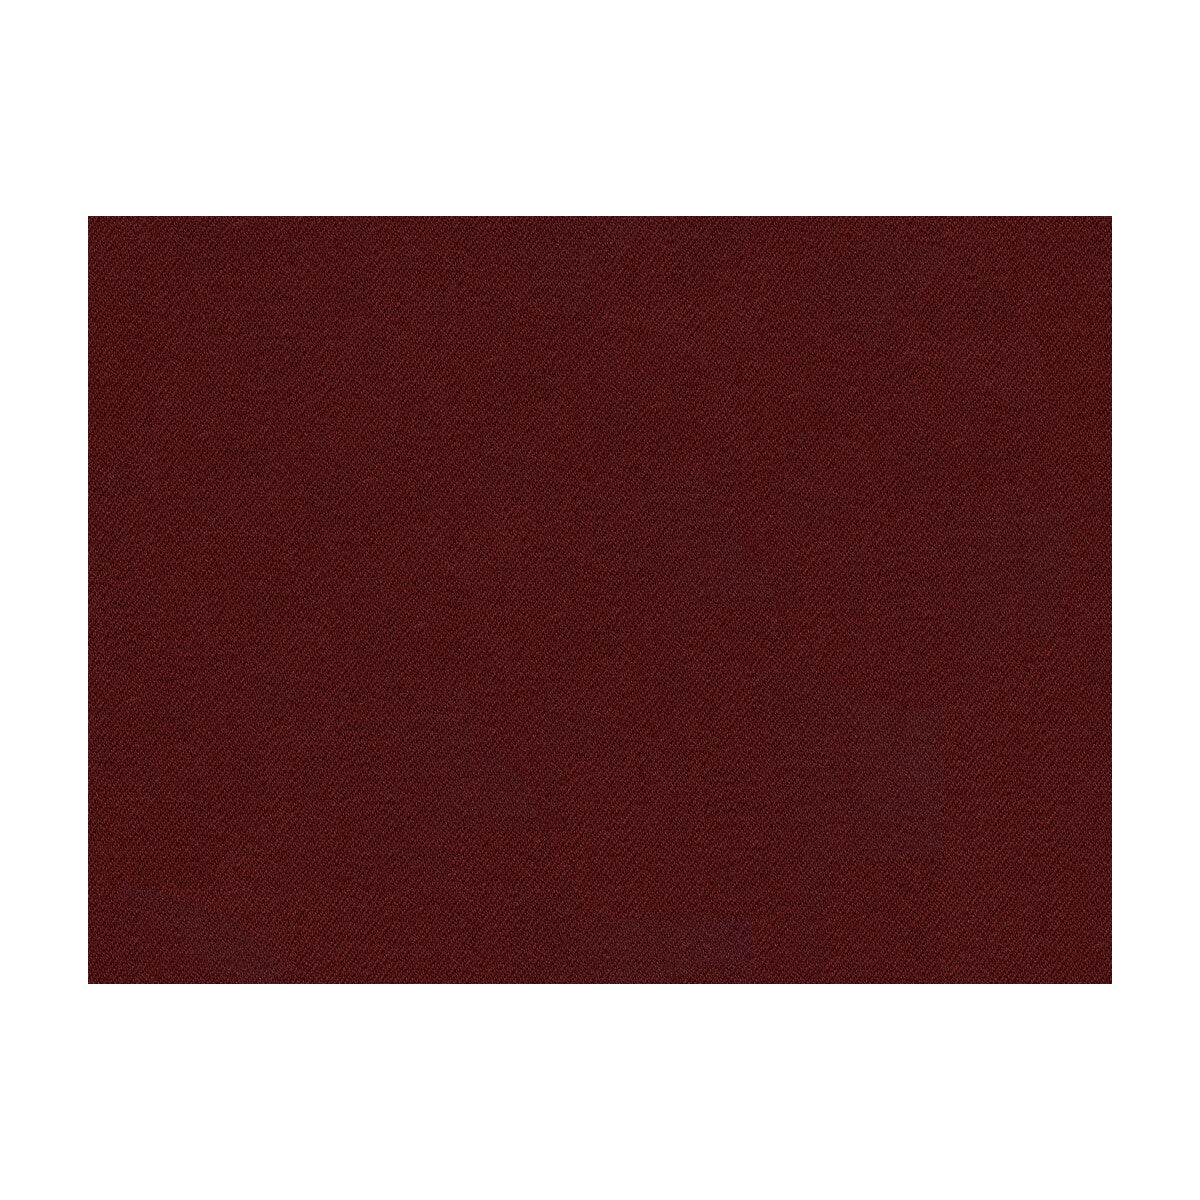 Fyvie Wool Satin fabric in burgundy color - pattern BR-89768.188.0 - by Brunschwig &amp; Fils